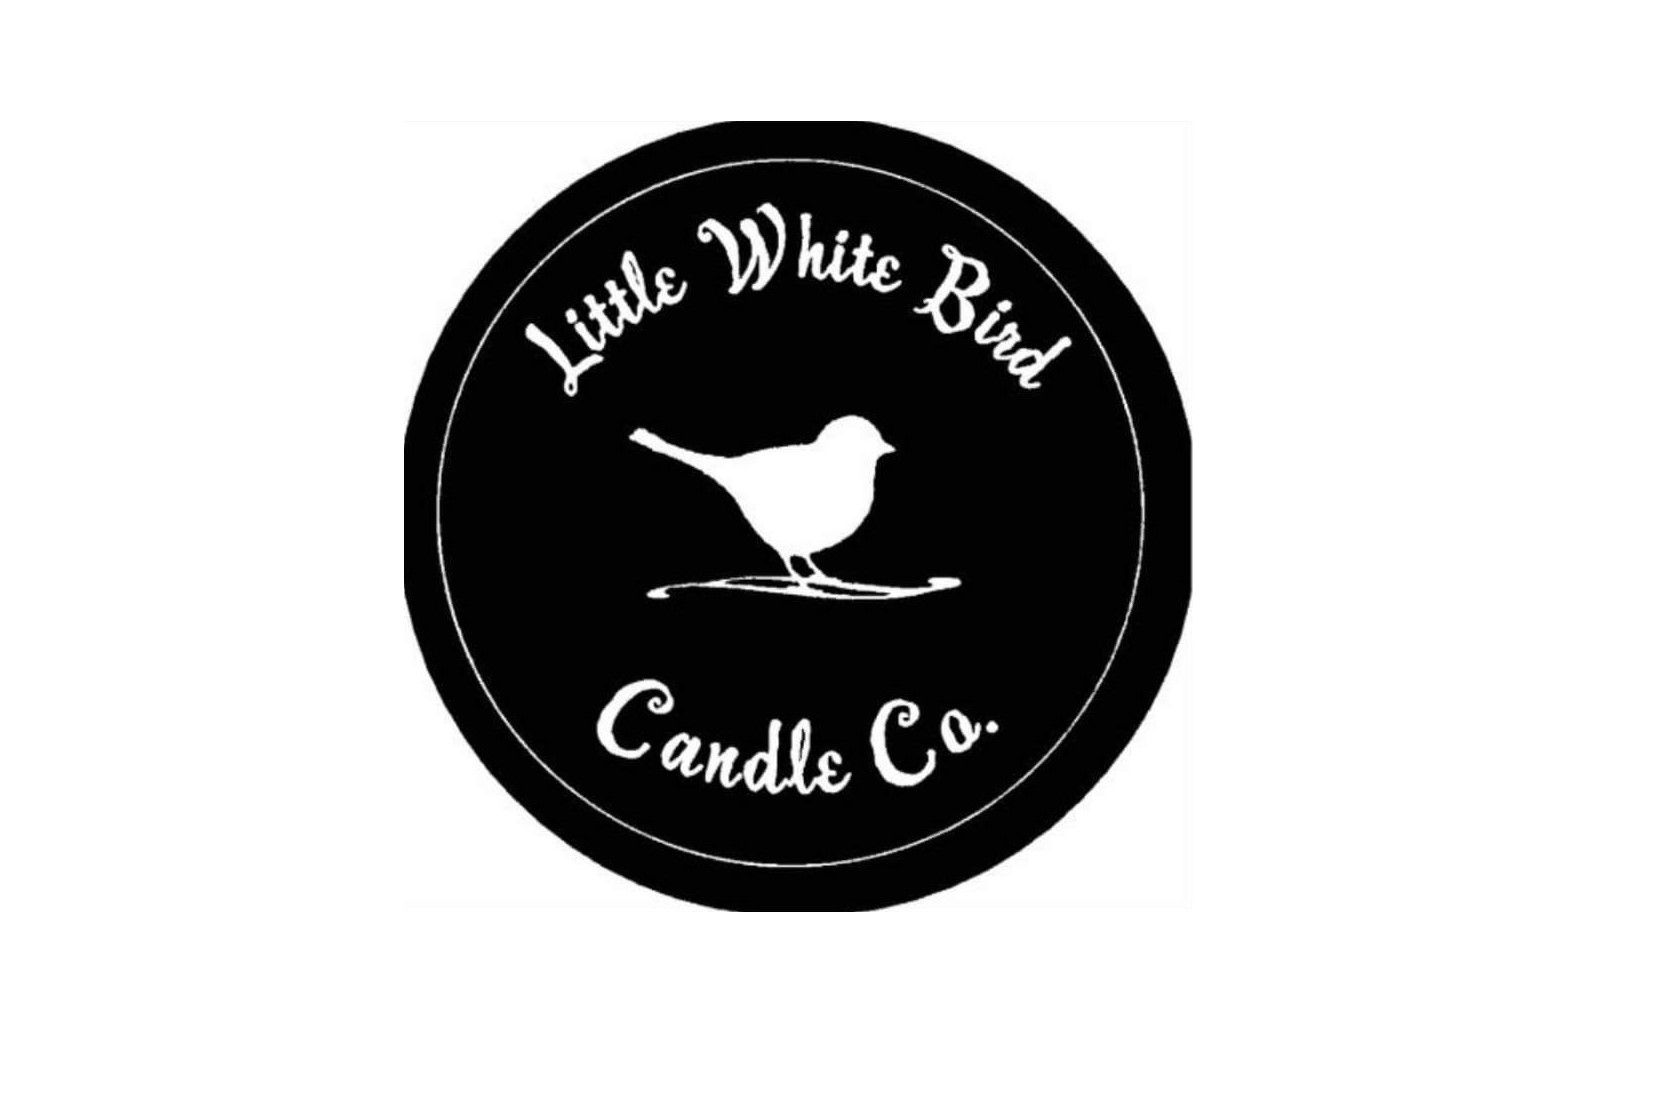 Little White Bird Candle Co. - Chelsea Warren